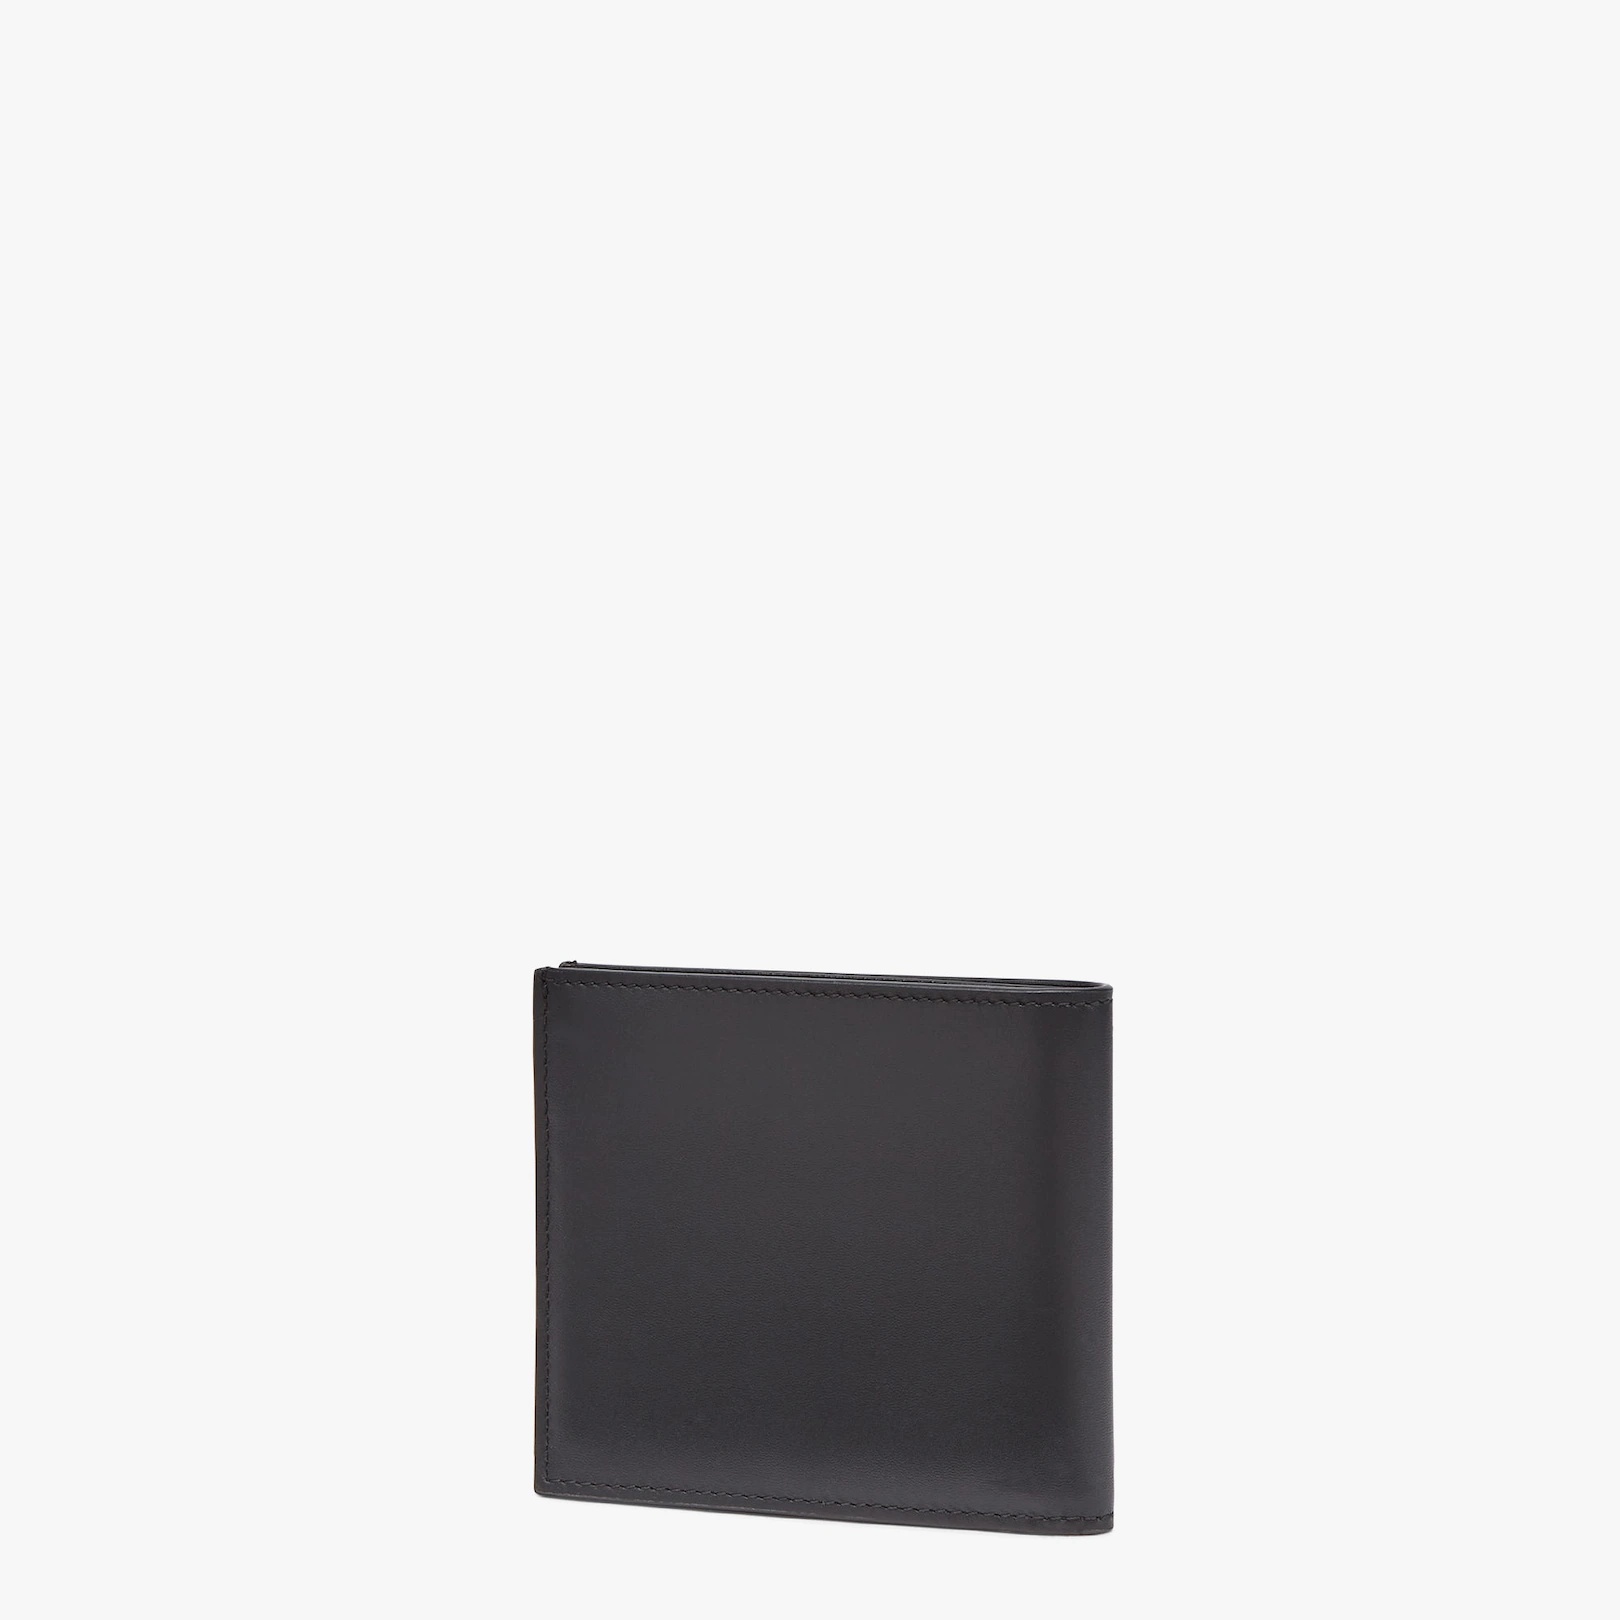 Black leather bi-fold wallet - 2